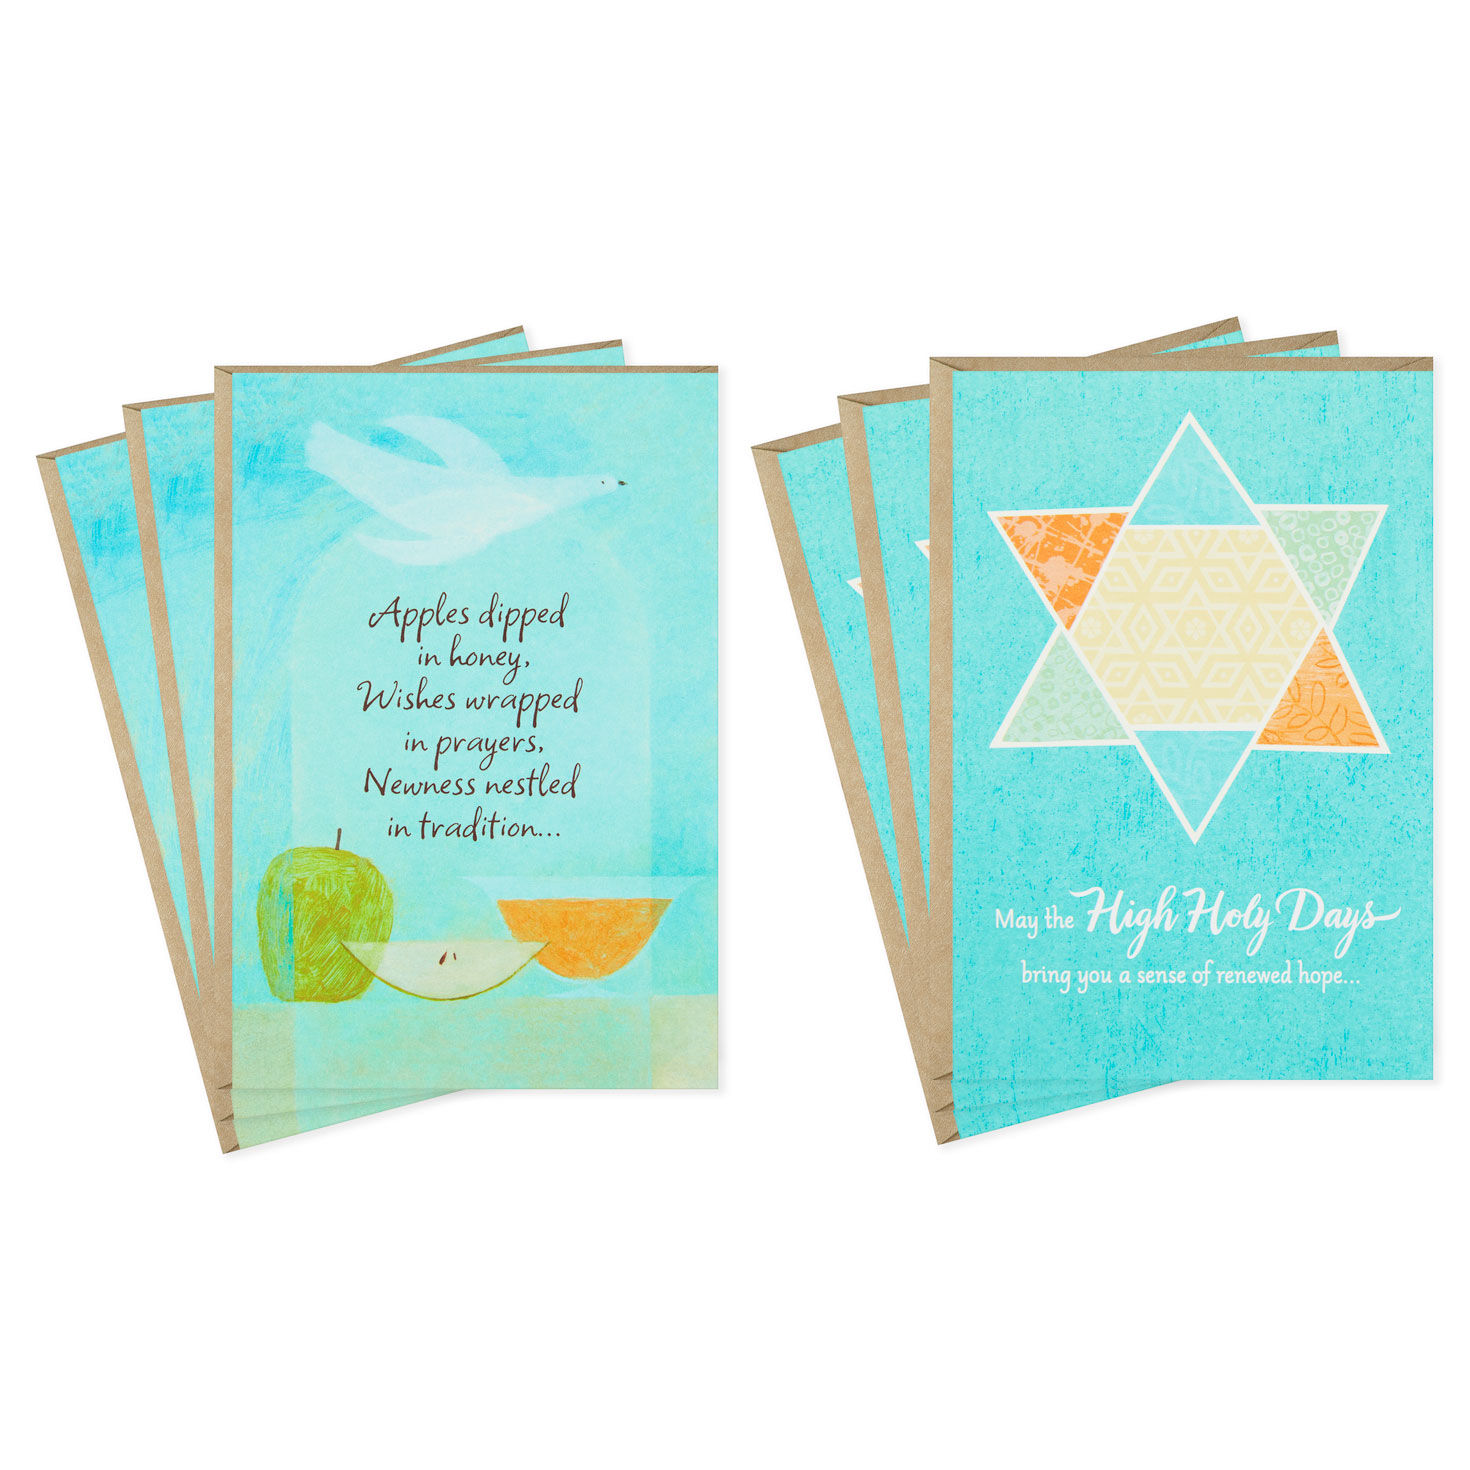 Lot of 3 ~ Hallmark Tree of Life Rosh Hashanah~Jewish New Year Cards Pack of 6 